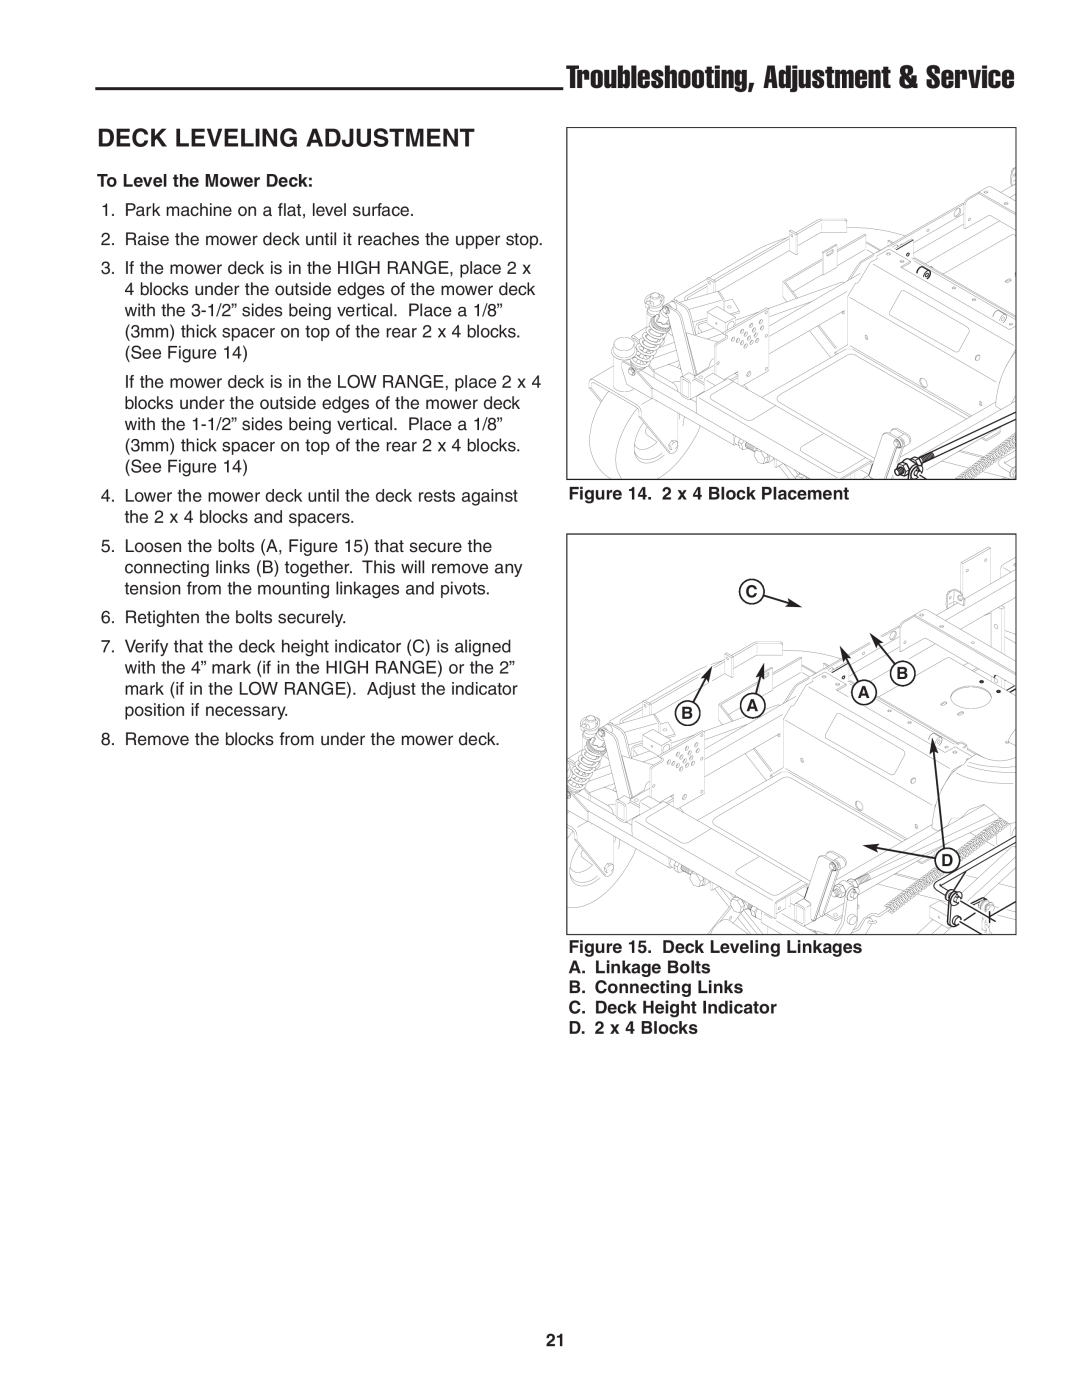 Snapper 13HP manual Deck Leveling Adjustment, Troubleshooting, Adjustment & Service 